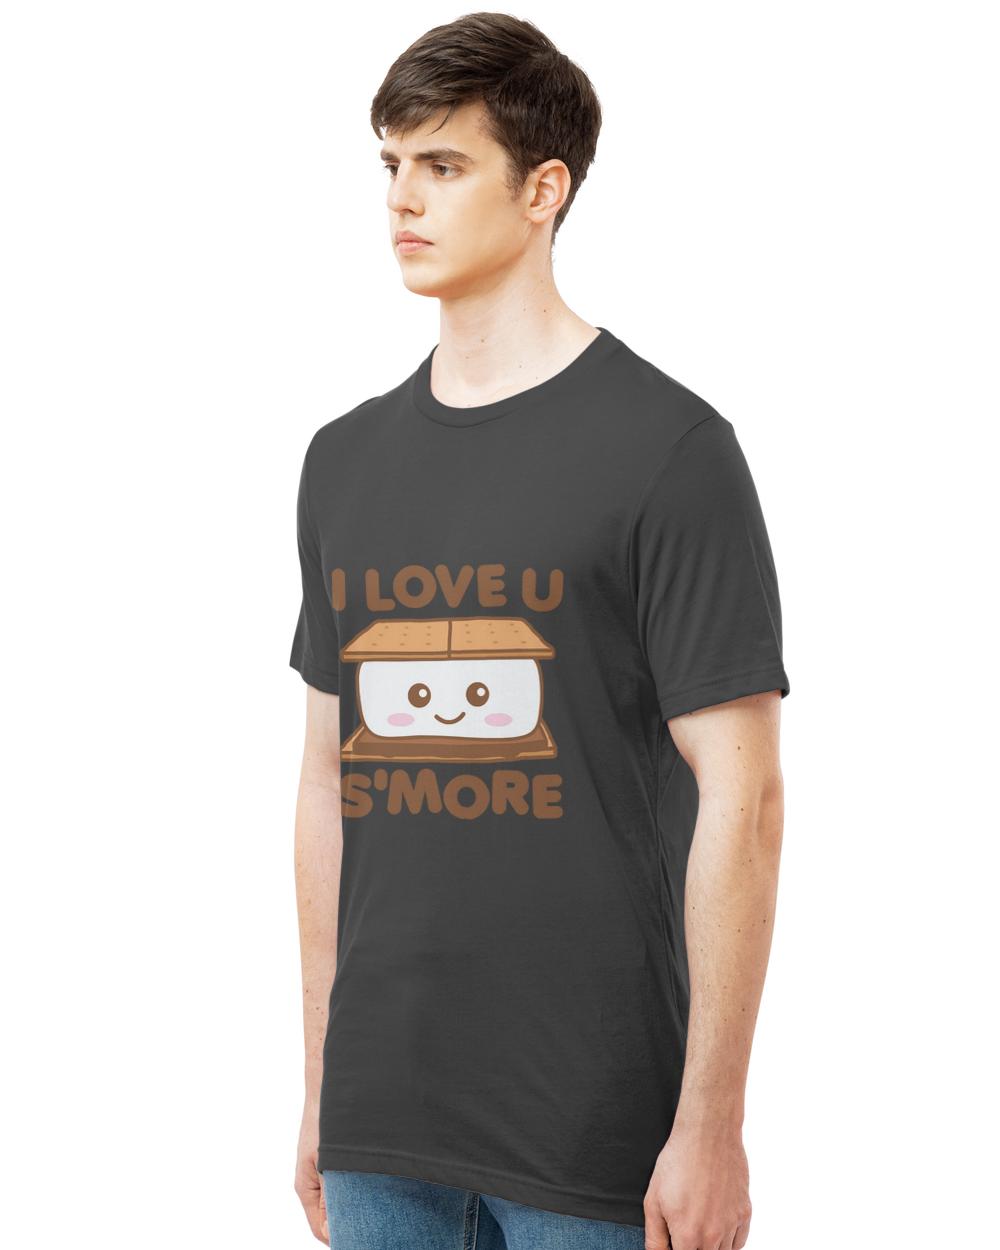 Smores Lover T-ShirtI Love You Smore Funny Camping S'more Pun Dark T-Shirt_by DetourShirts_